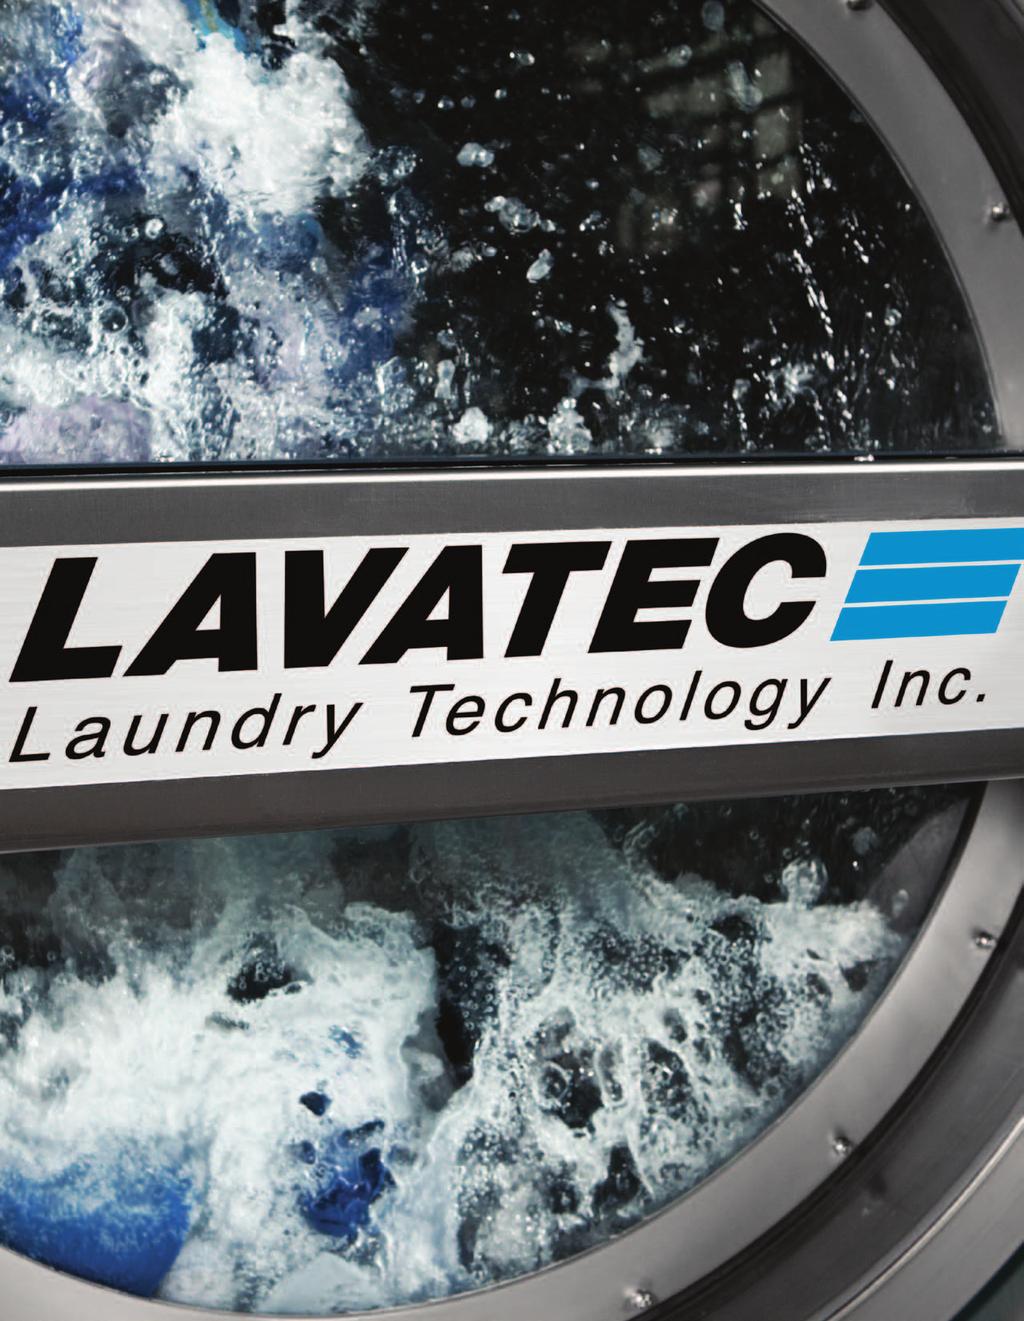 About Lavatec Laundry Technology, Inc.